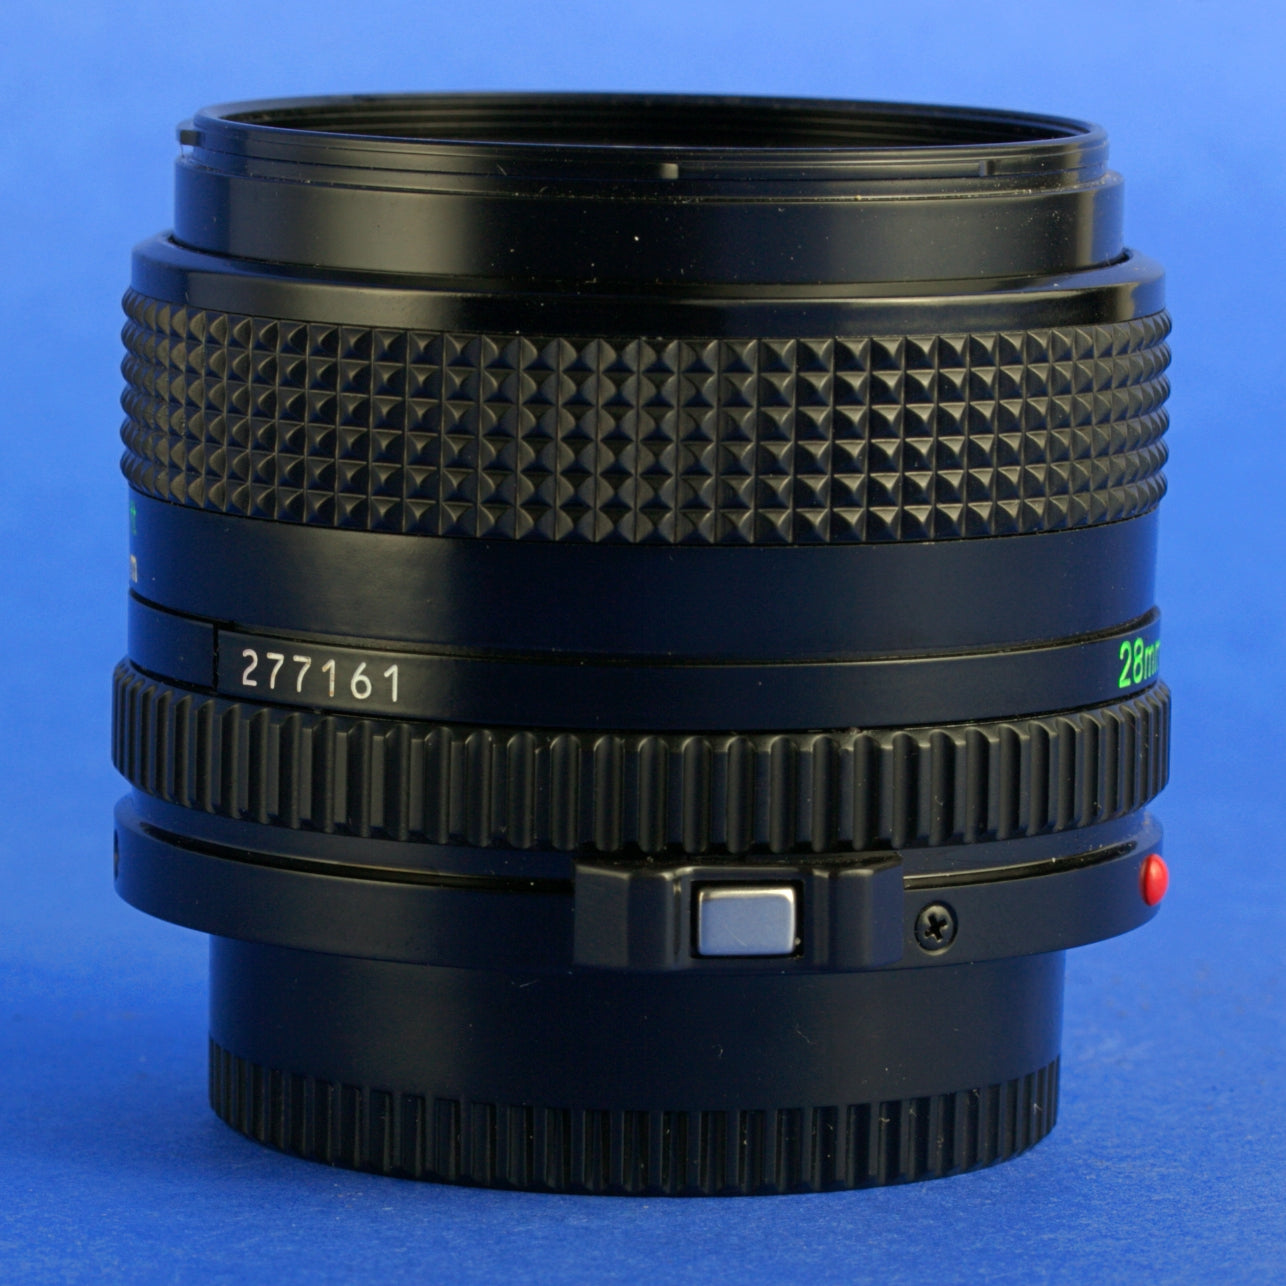 Canon FD 28mm 2.8 Lens Near Mint Condition